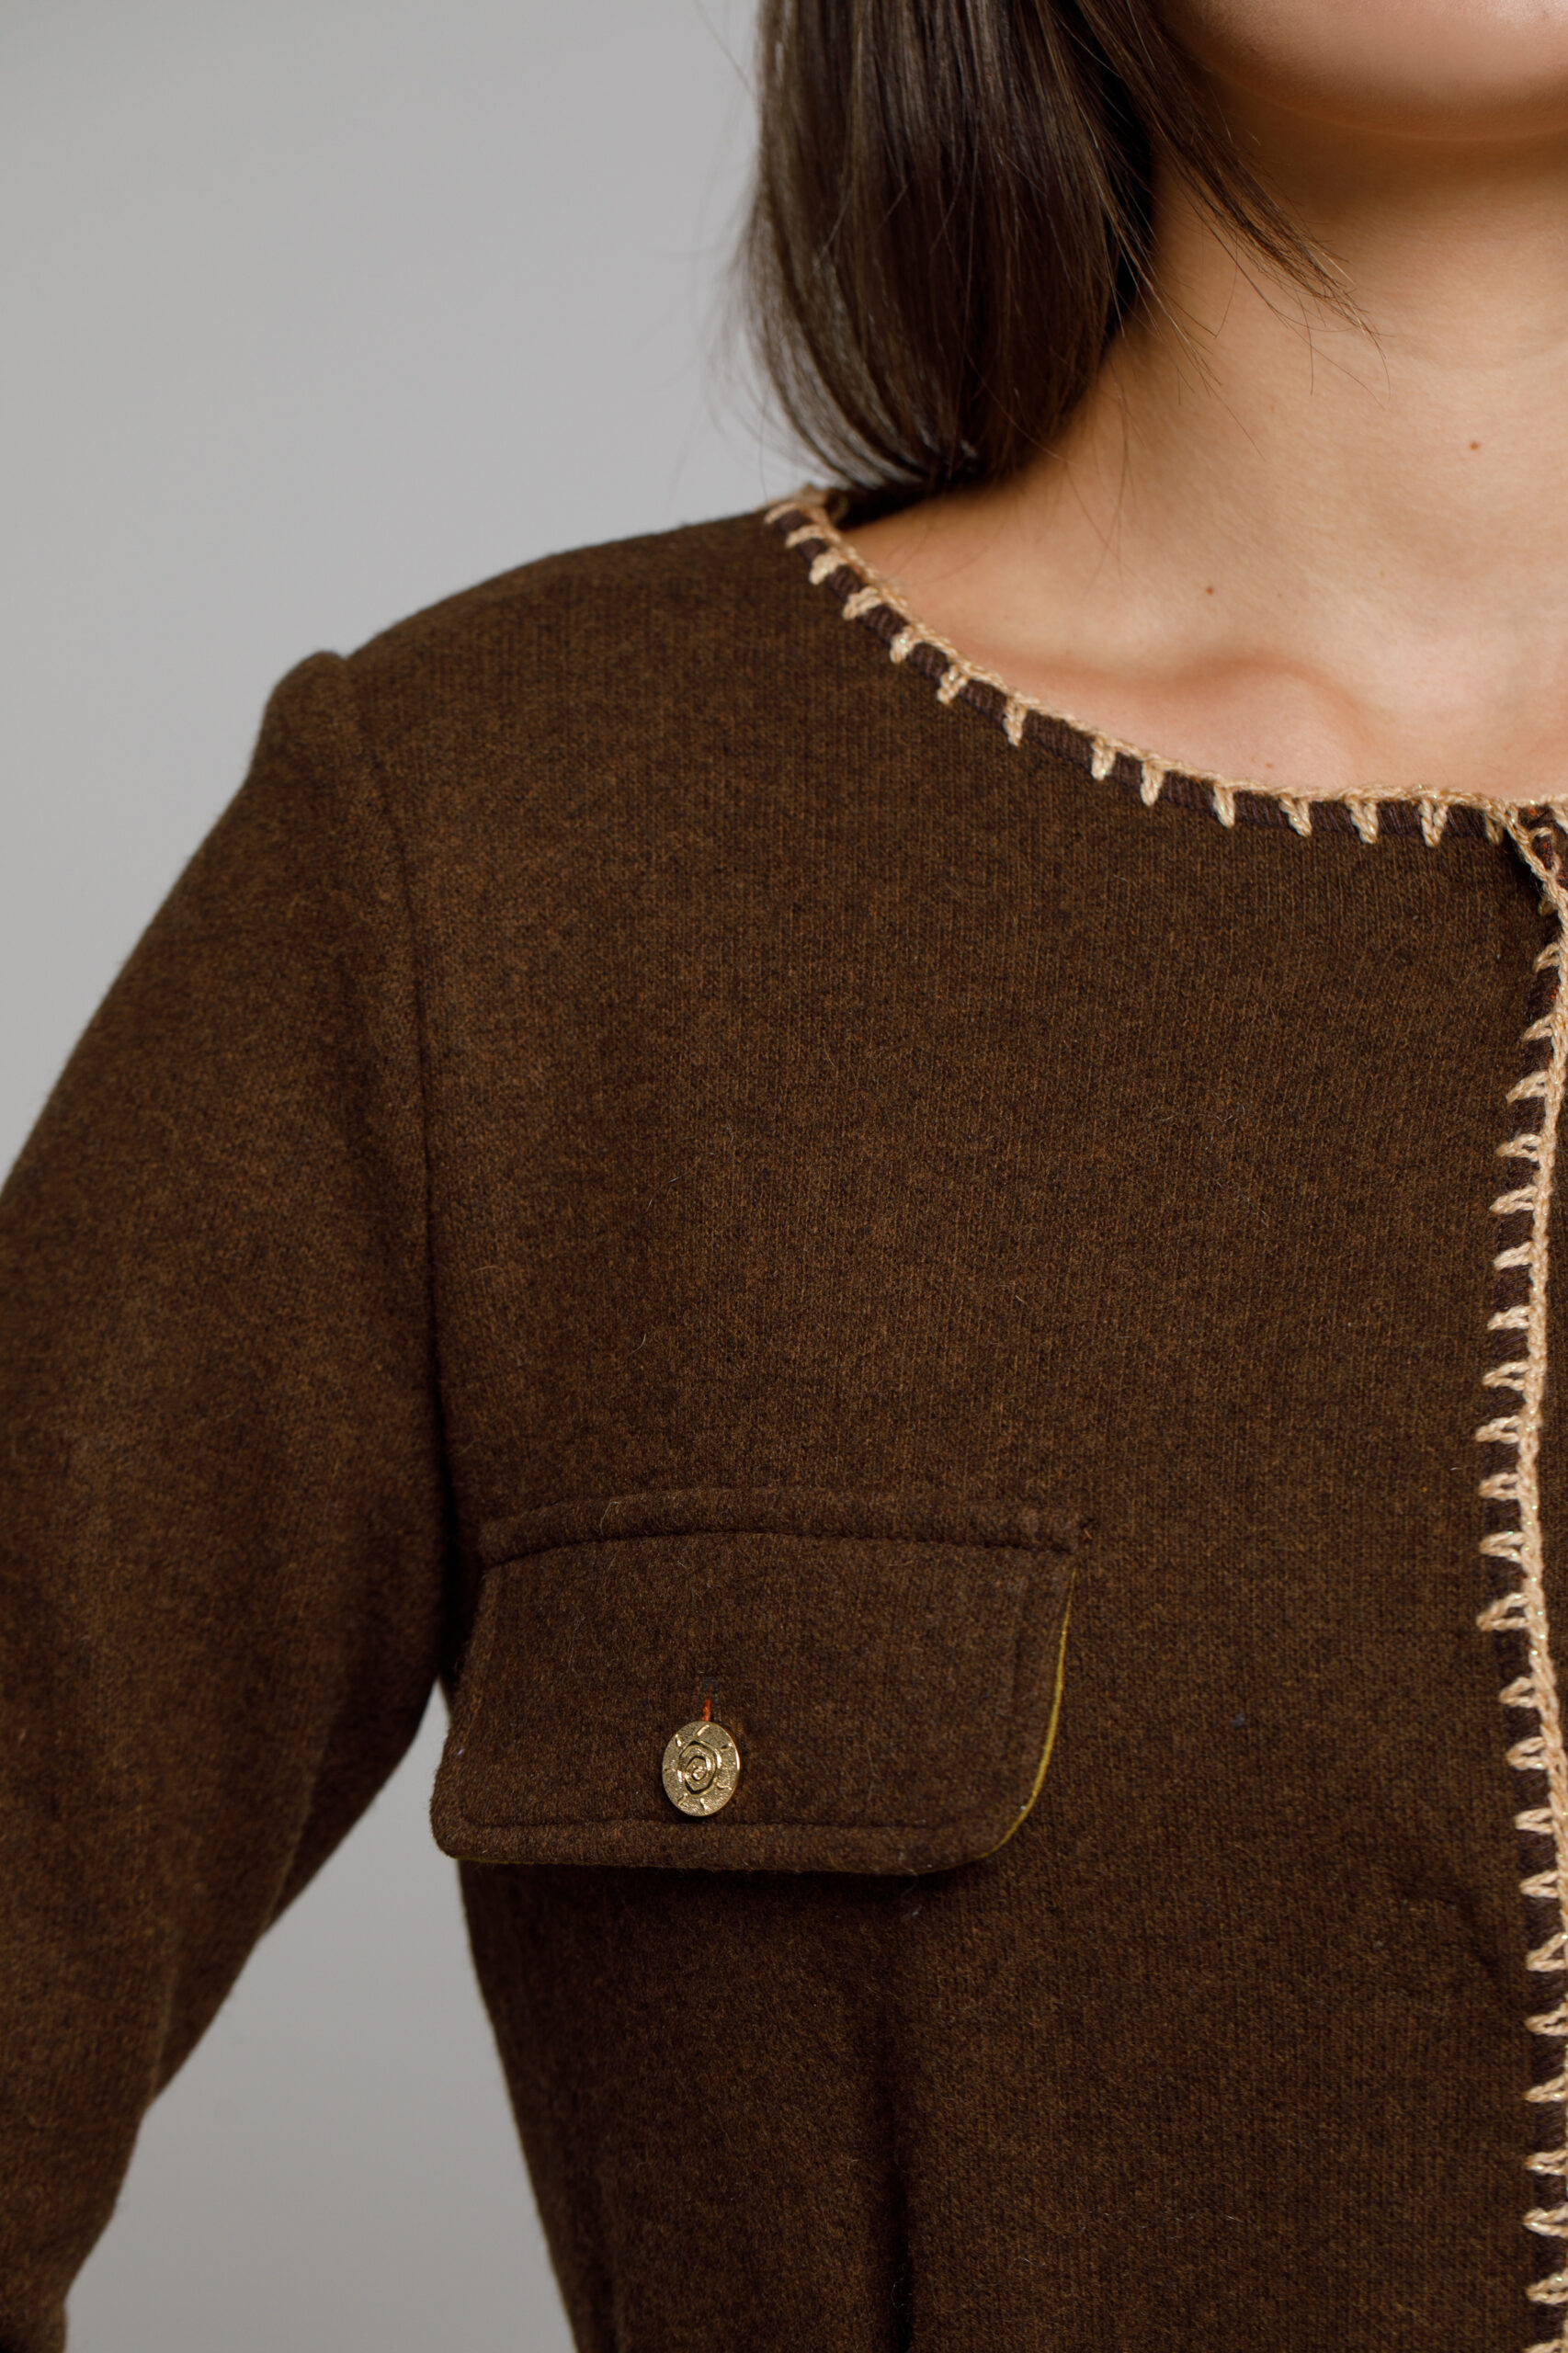 Jacket - HARMONY sweater made of brown fabric. Natural fabrics, original design, handmade embroidery